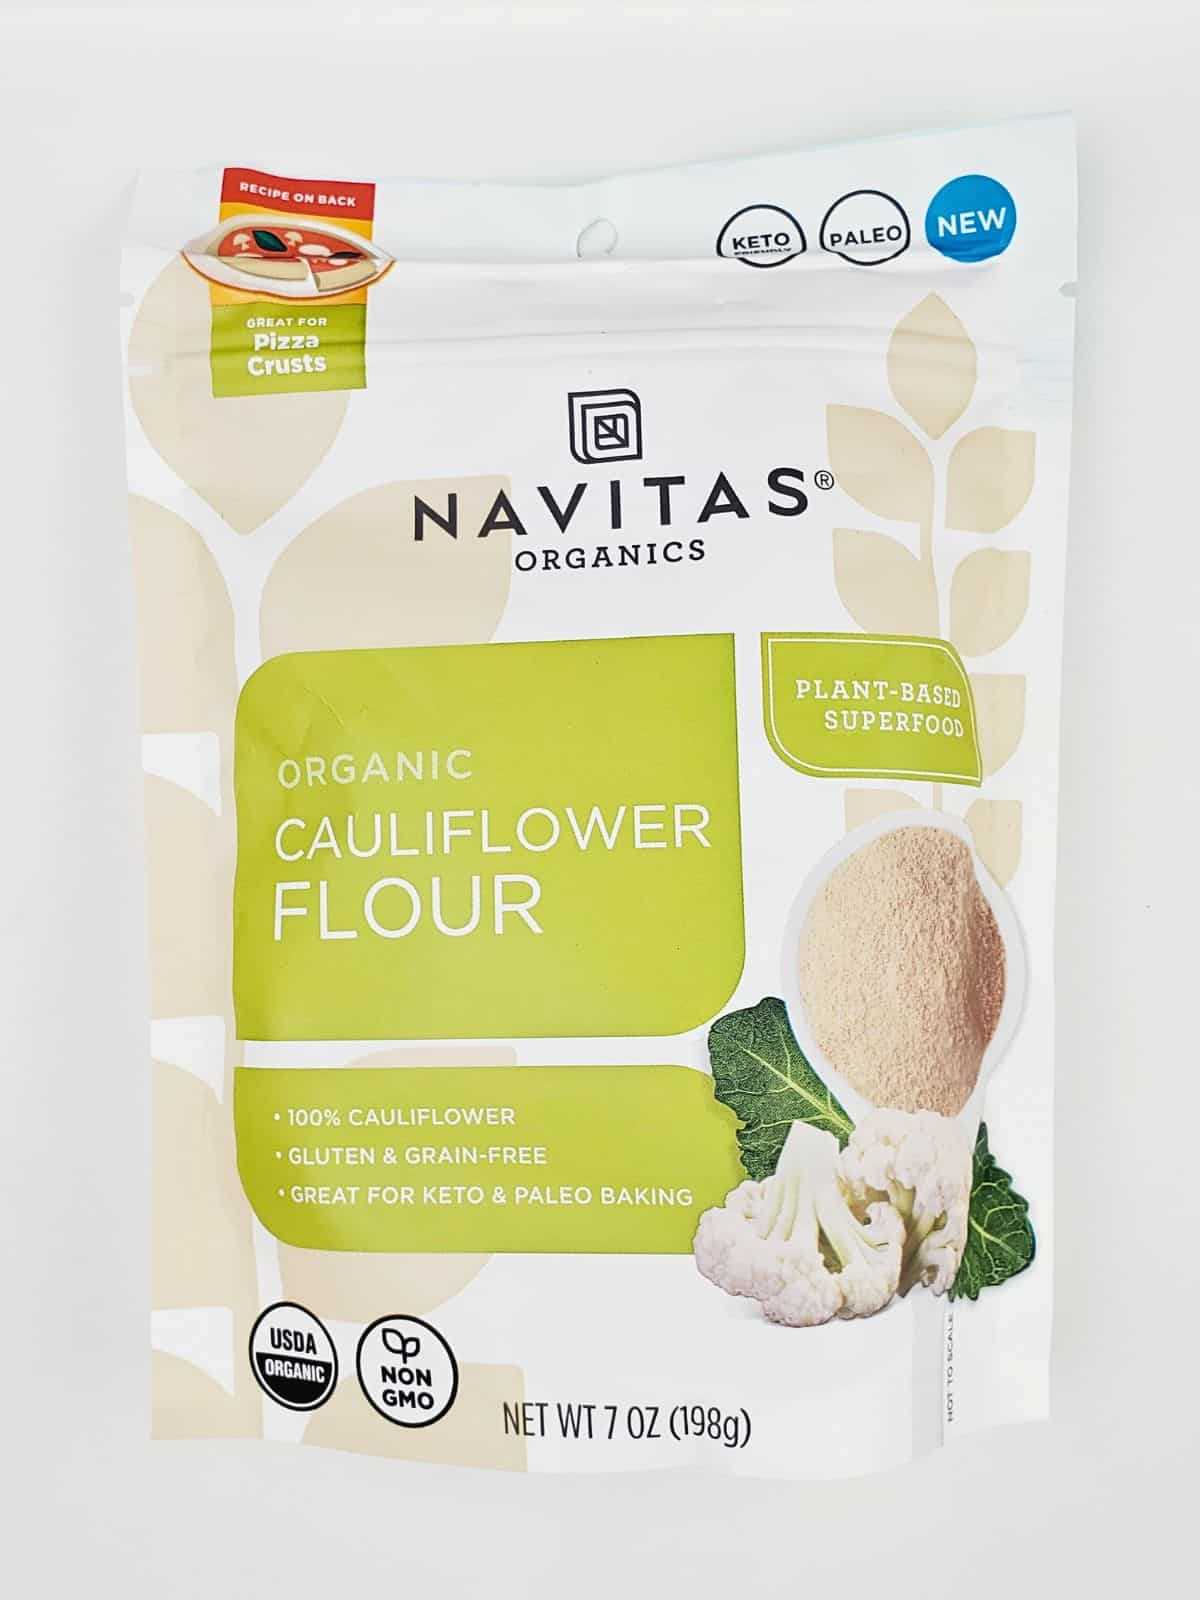 a pack of 7 oz. of organic cauliflower flour from Navitas.